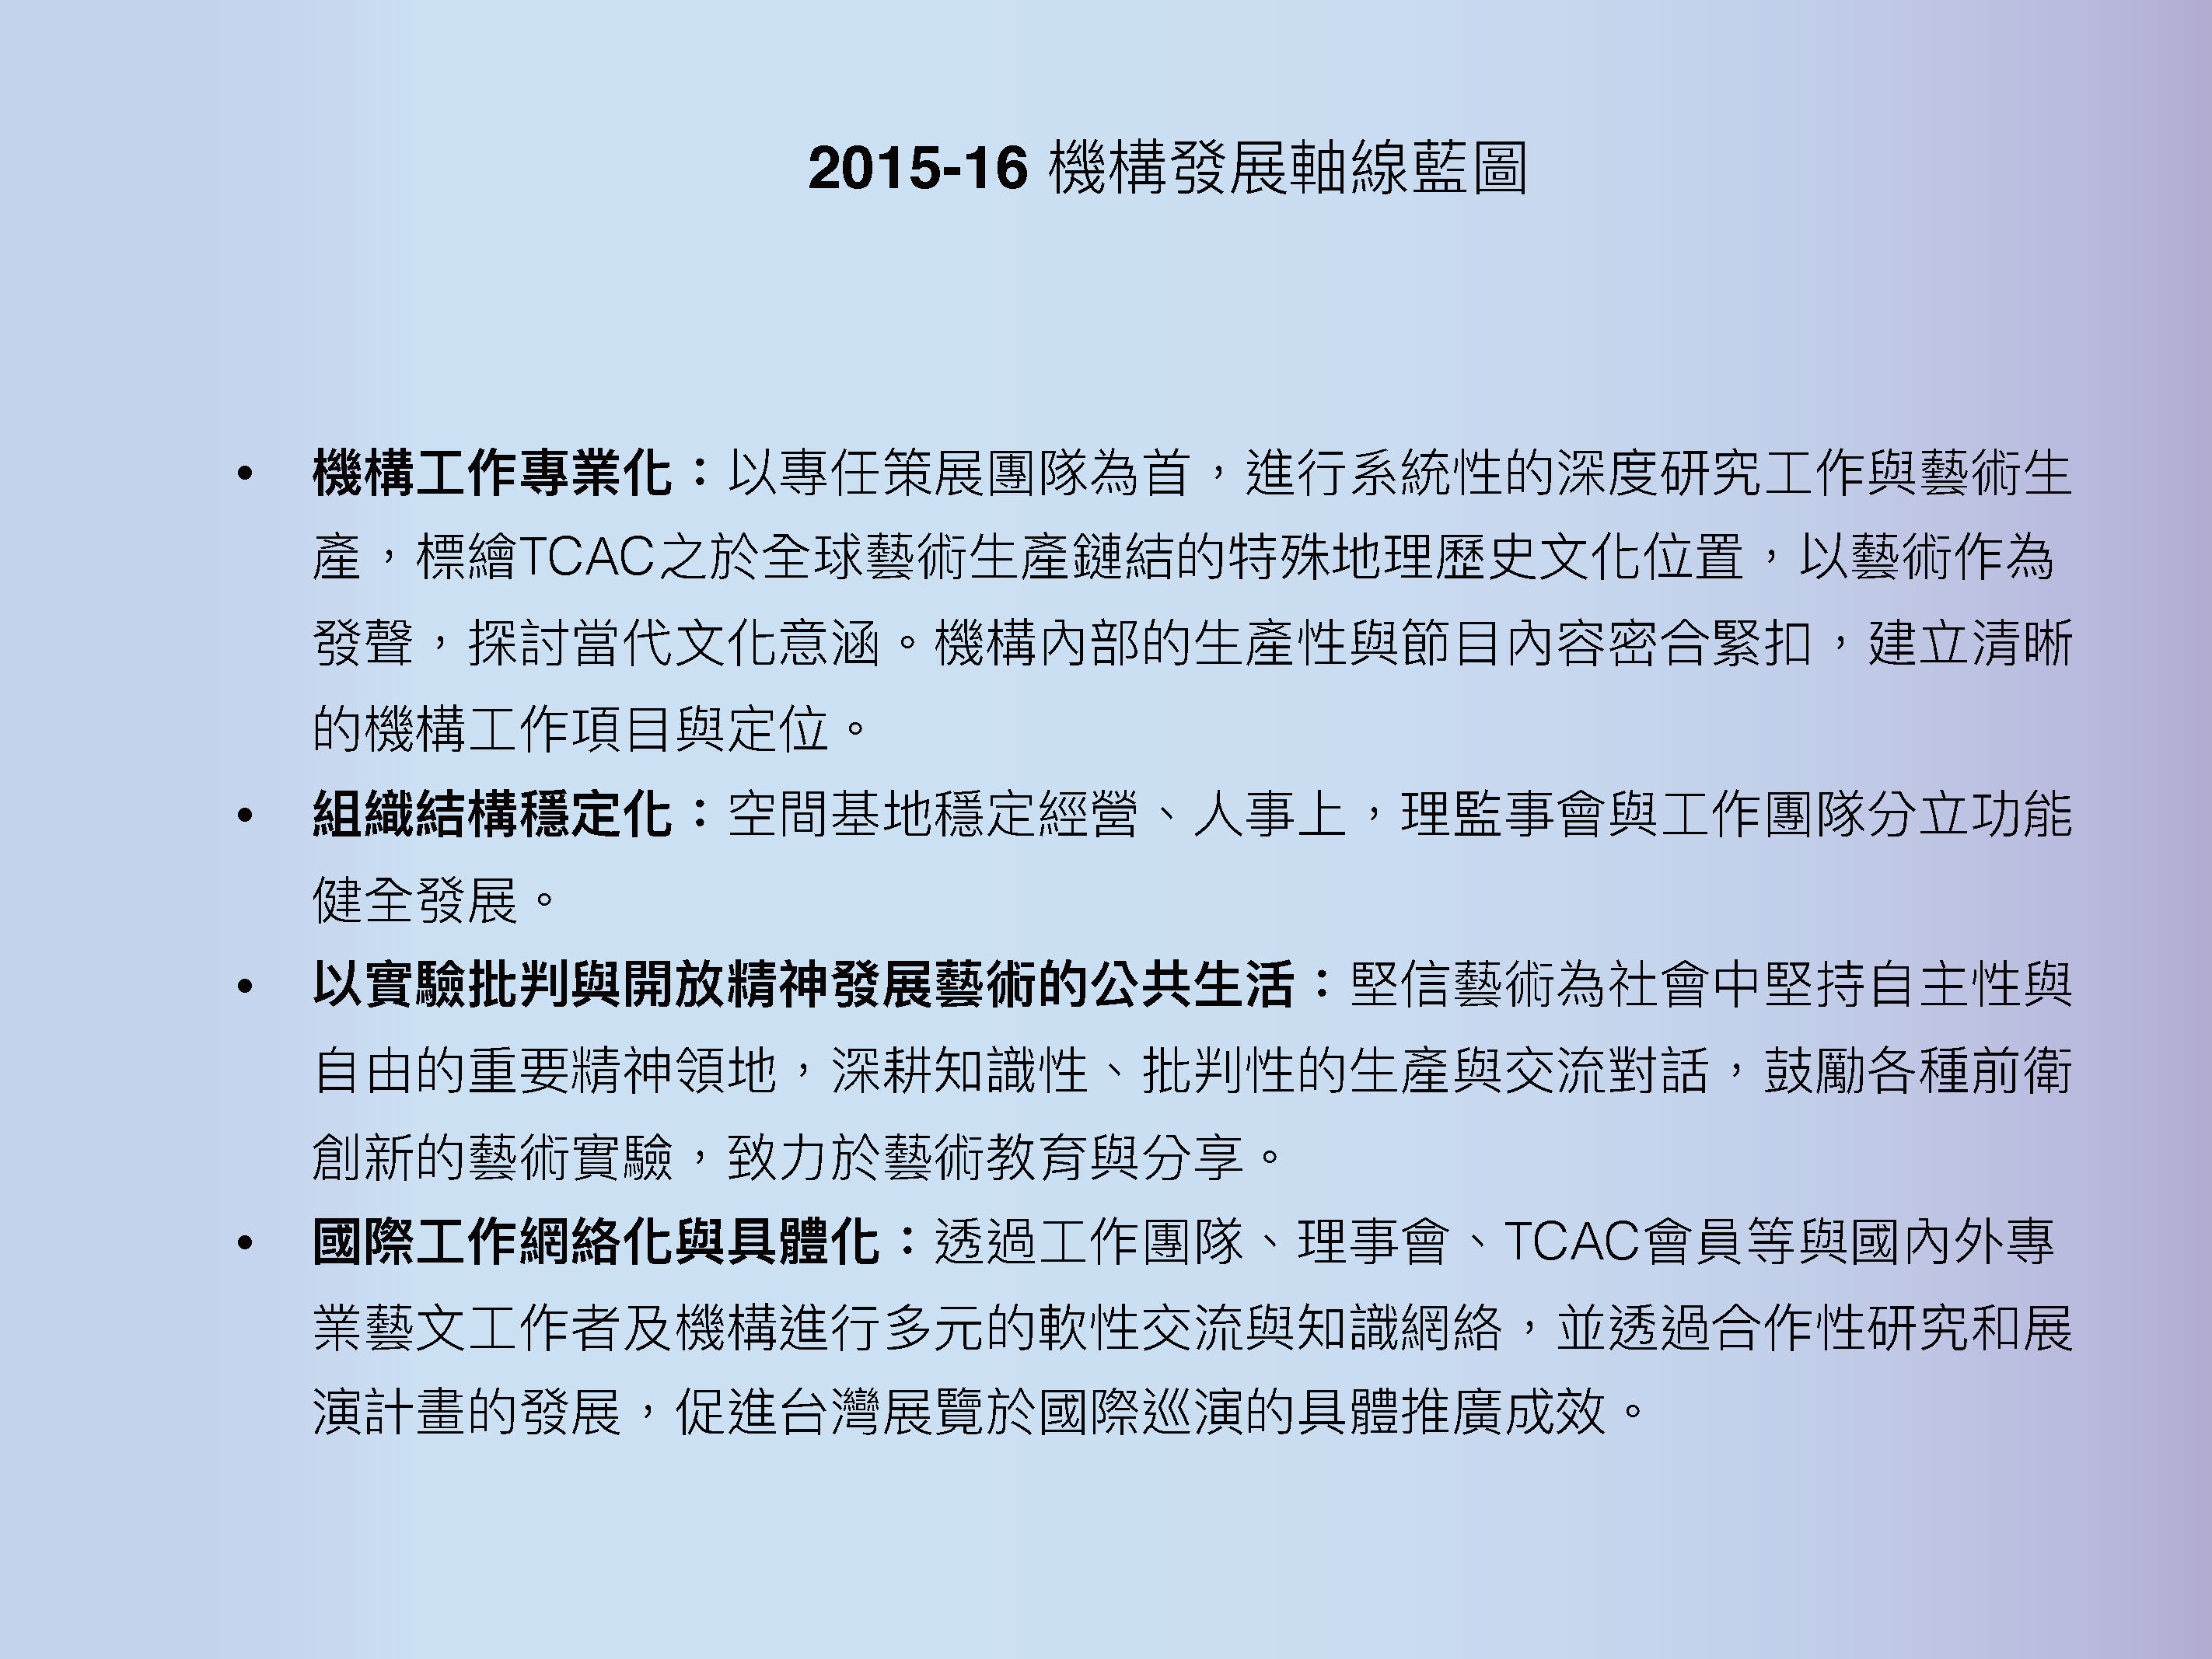 2015 TCAC Annual Report